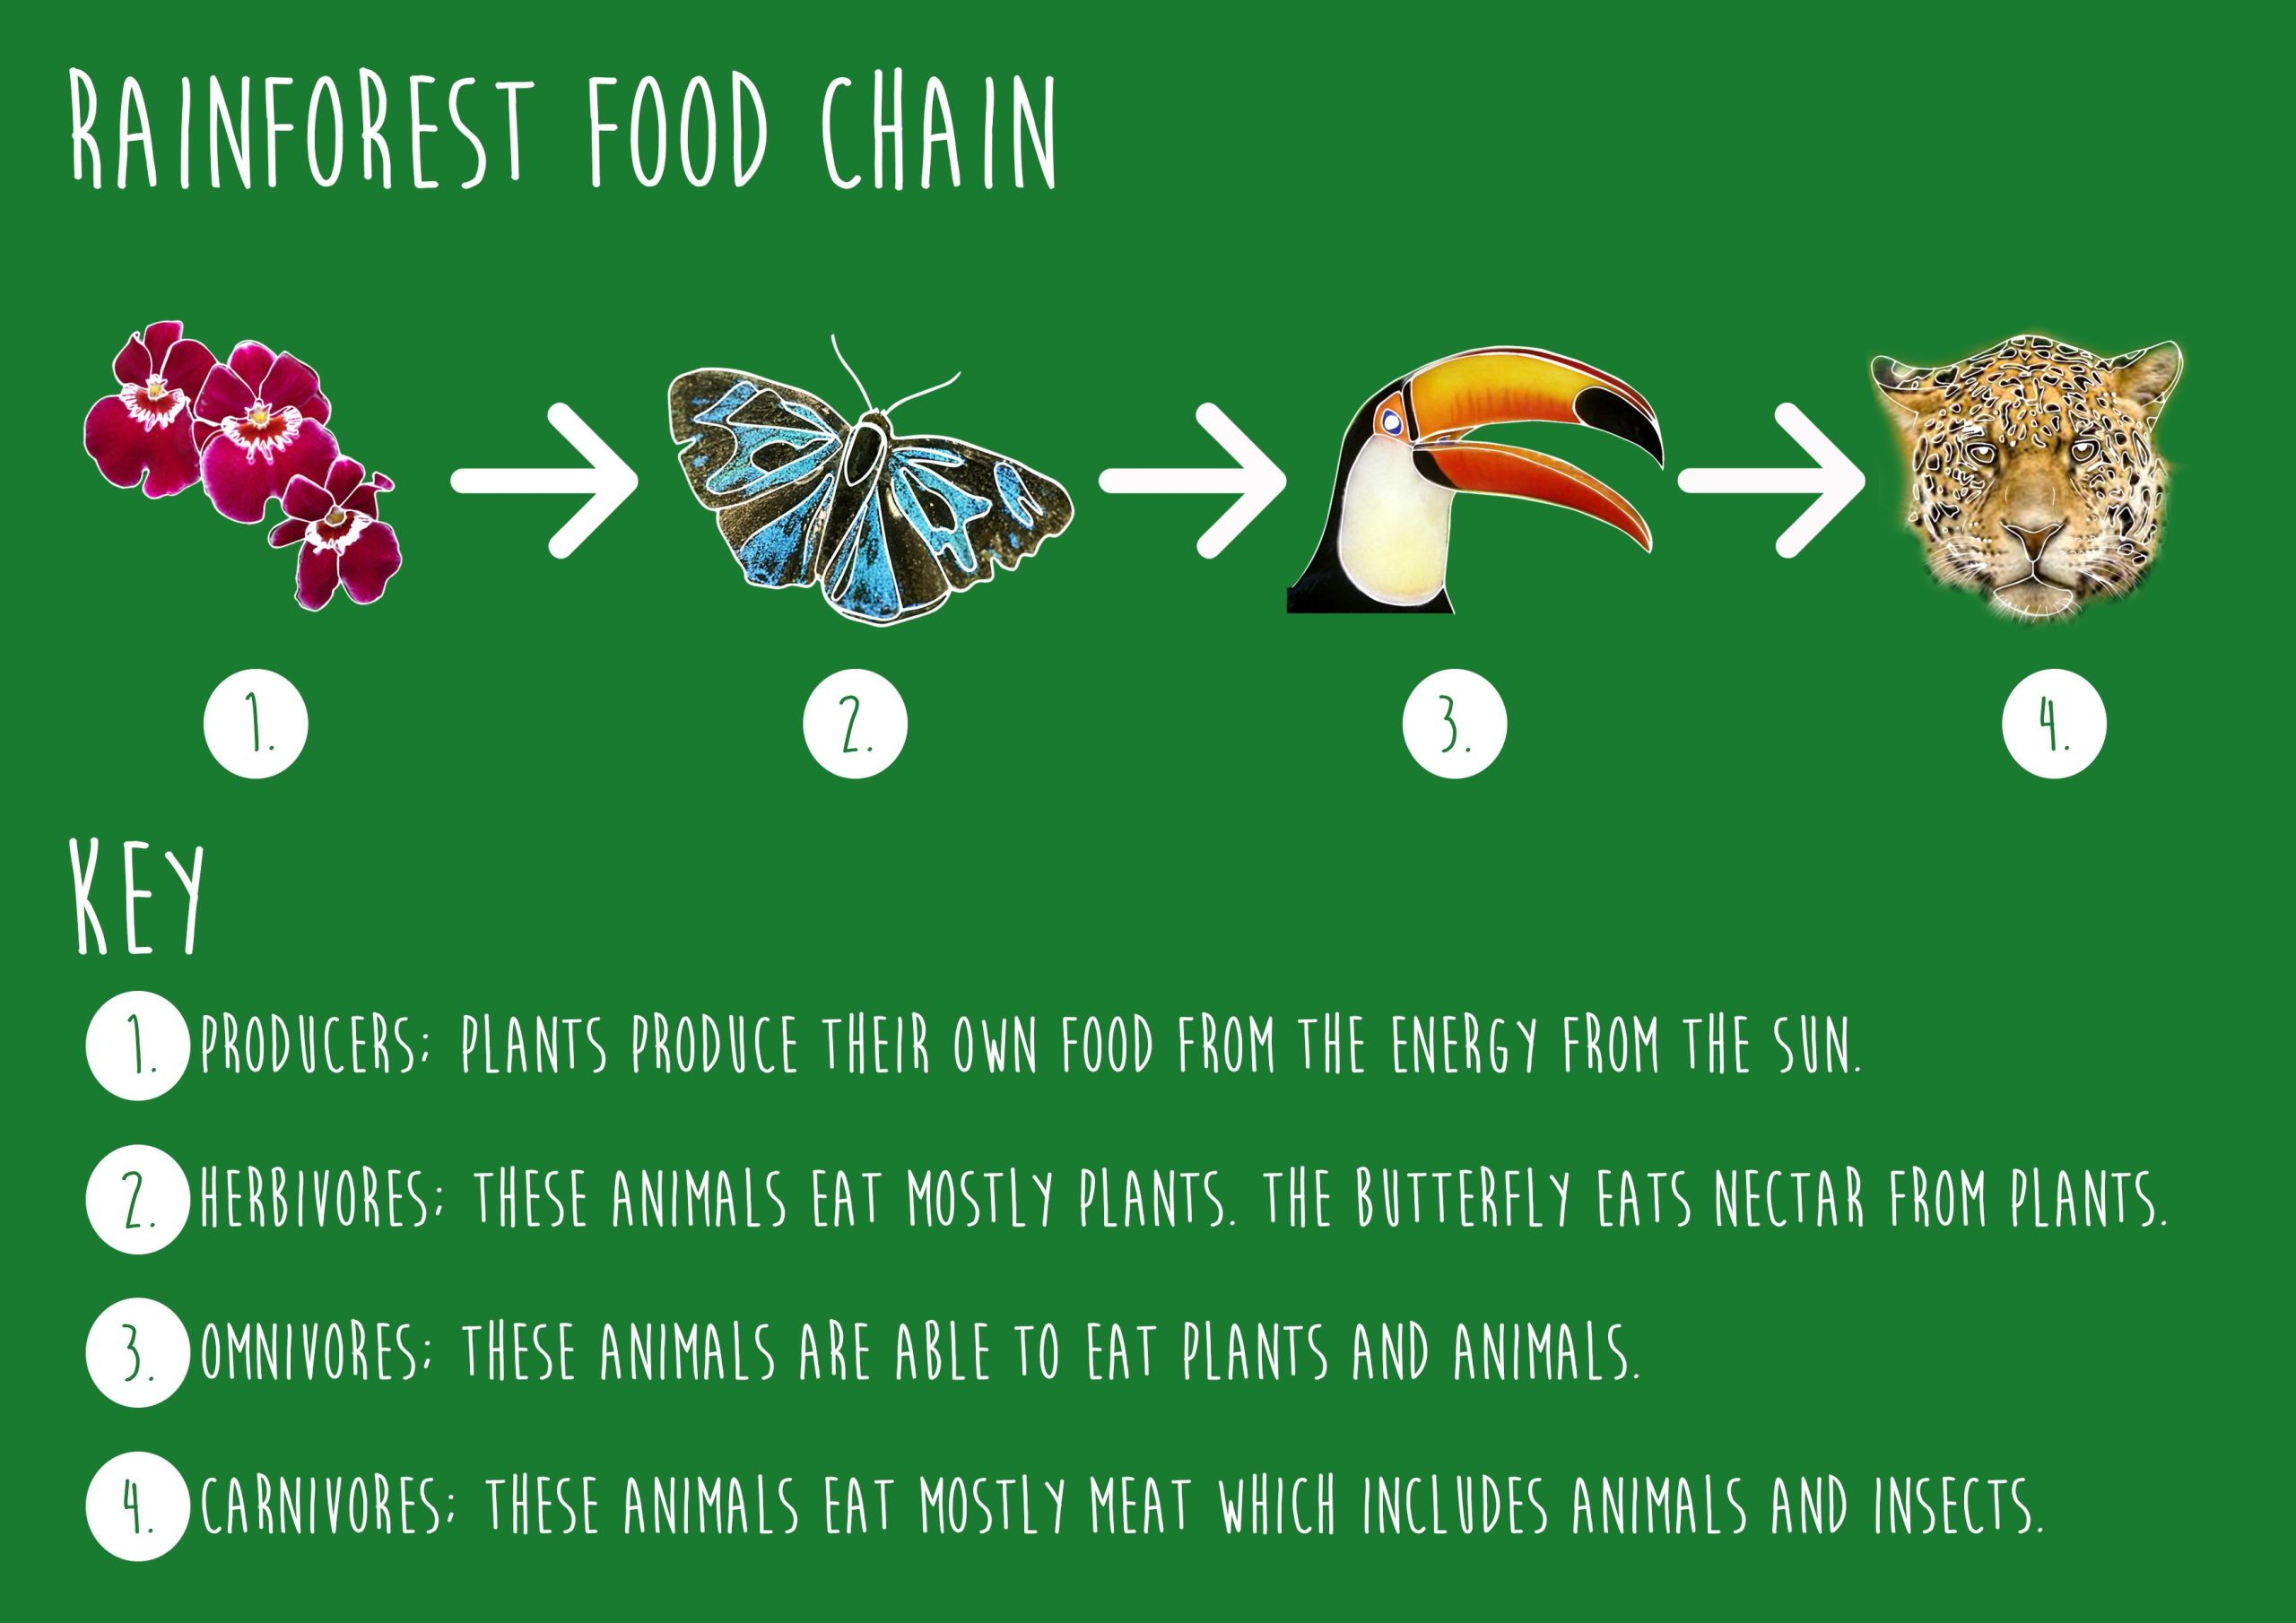 Rainforest food chain